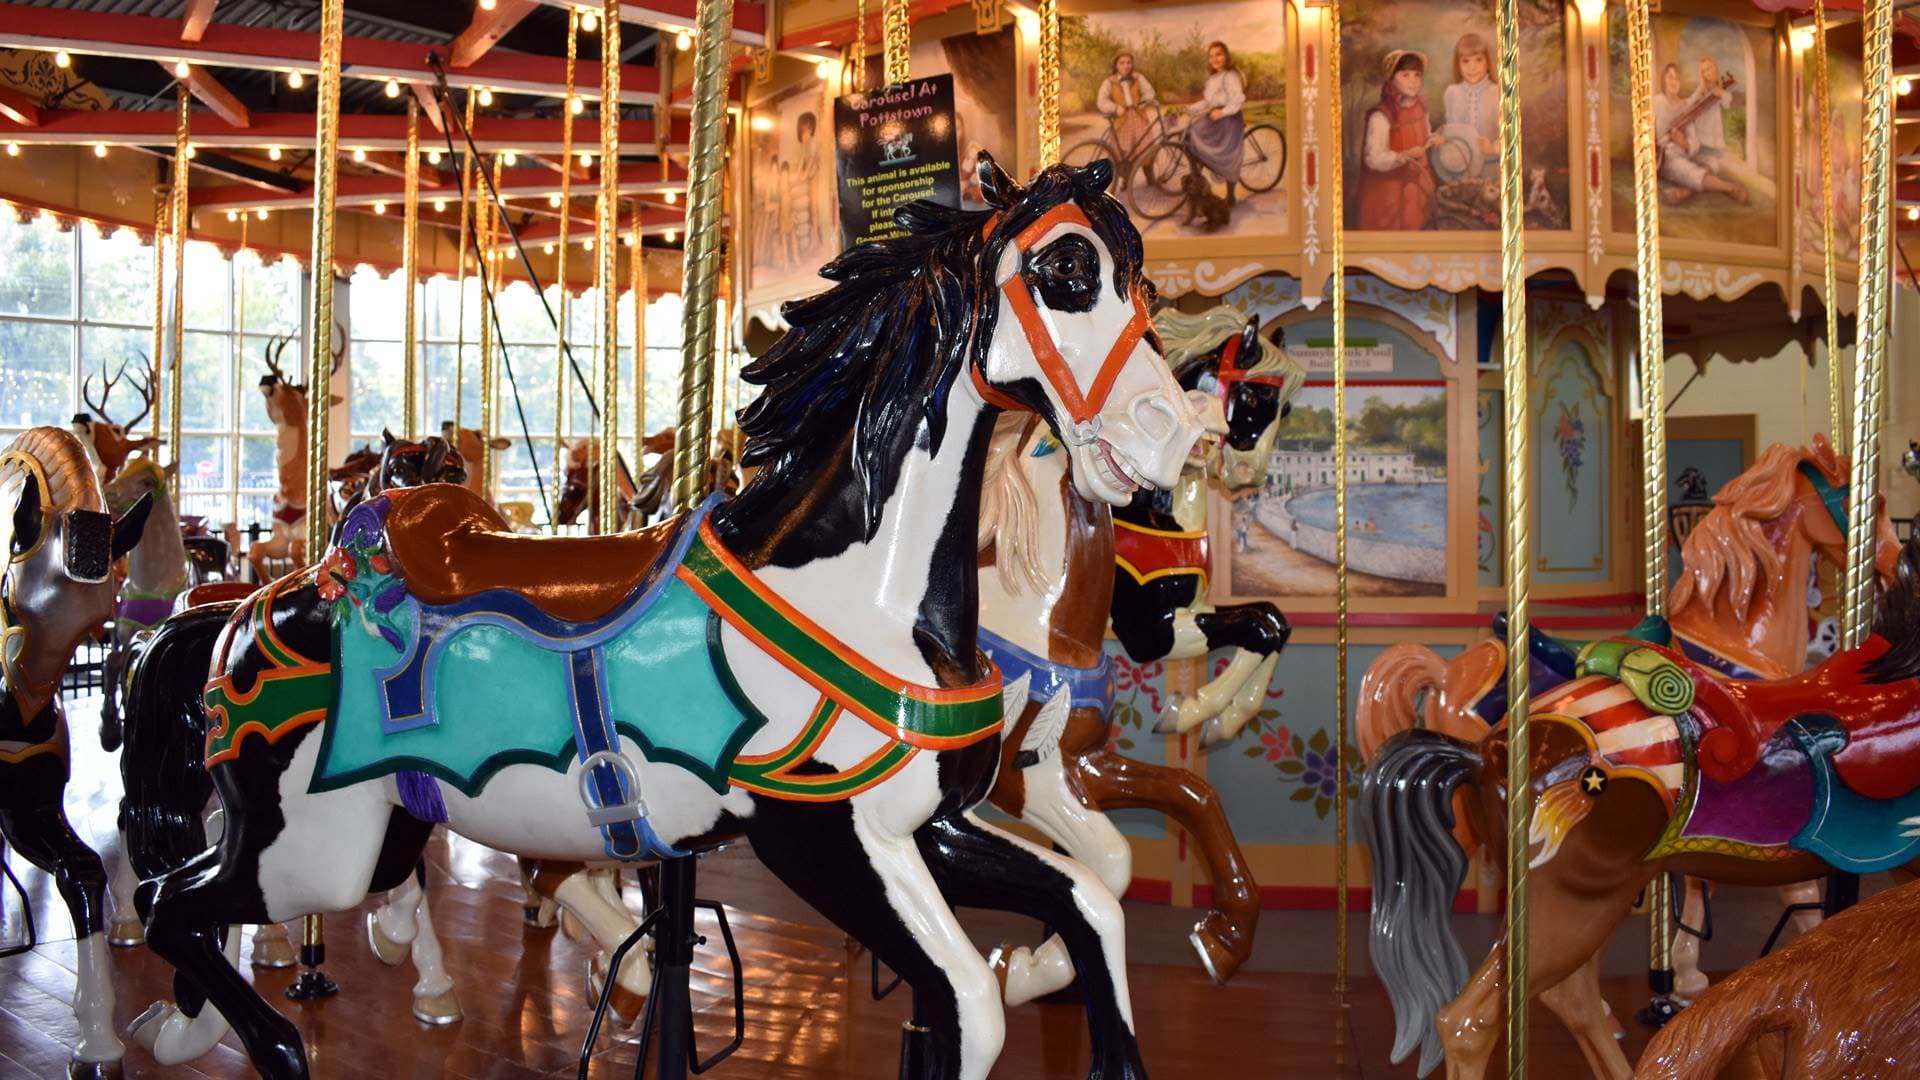 Carousel At Pottstown